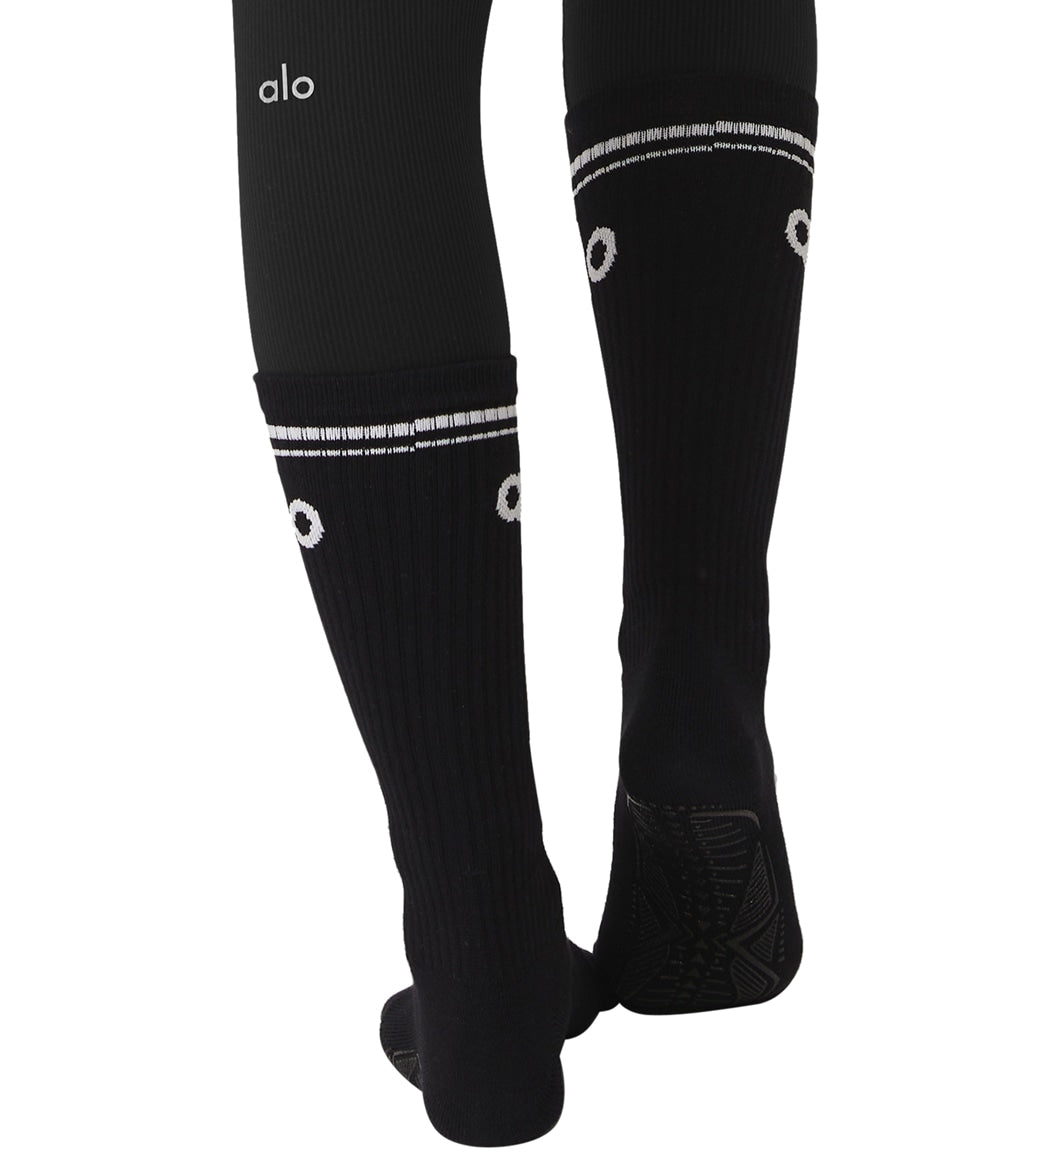 Alo Yoga S/M Women's Throwback Sock - Athletic Grey/Black